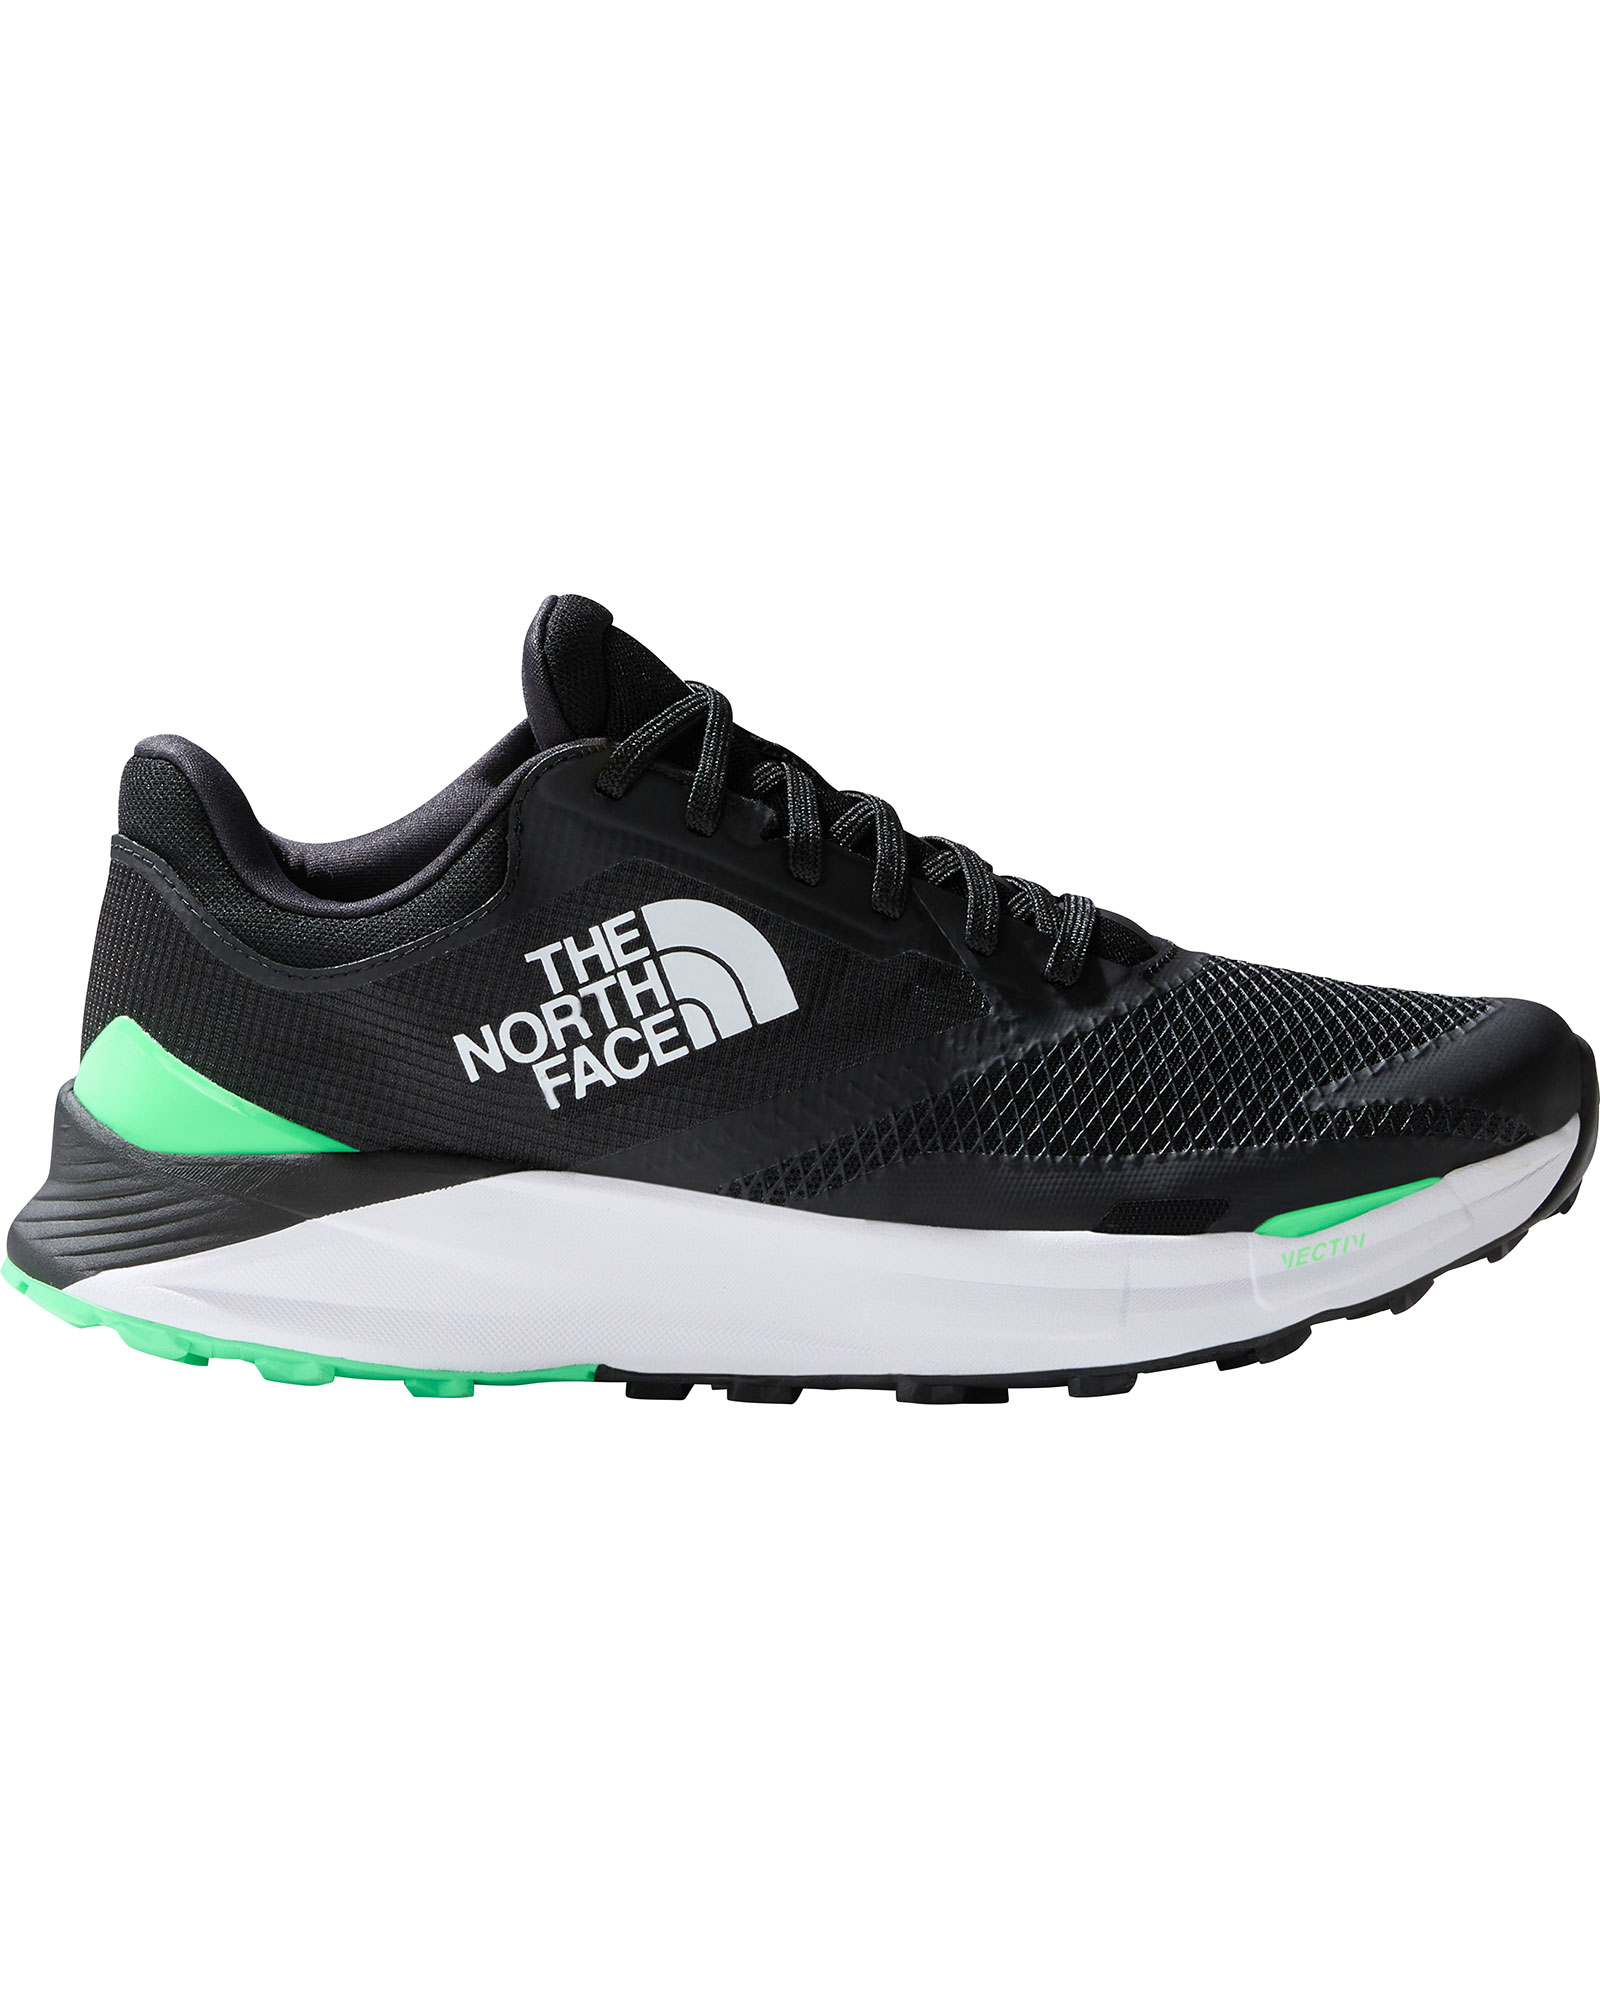 The North Face Vectiv Enduris 3 Men’s Trail Shoes - TNF Black/Chlorophyll Green UK 11